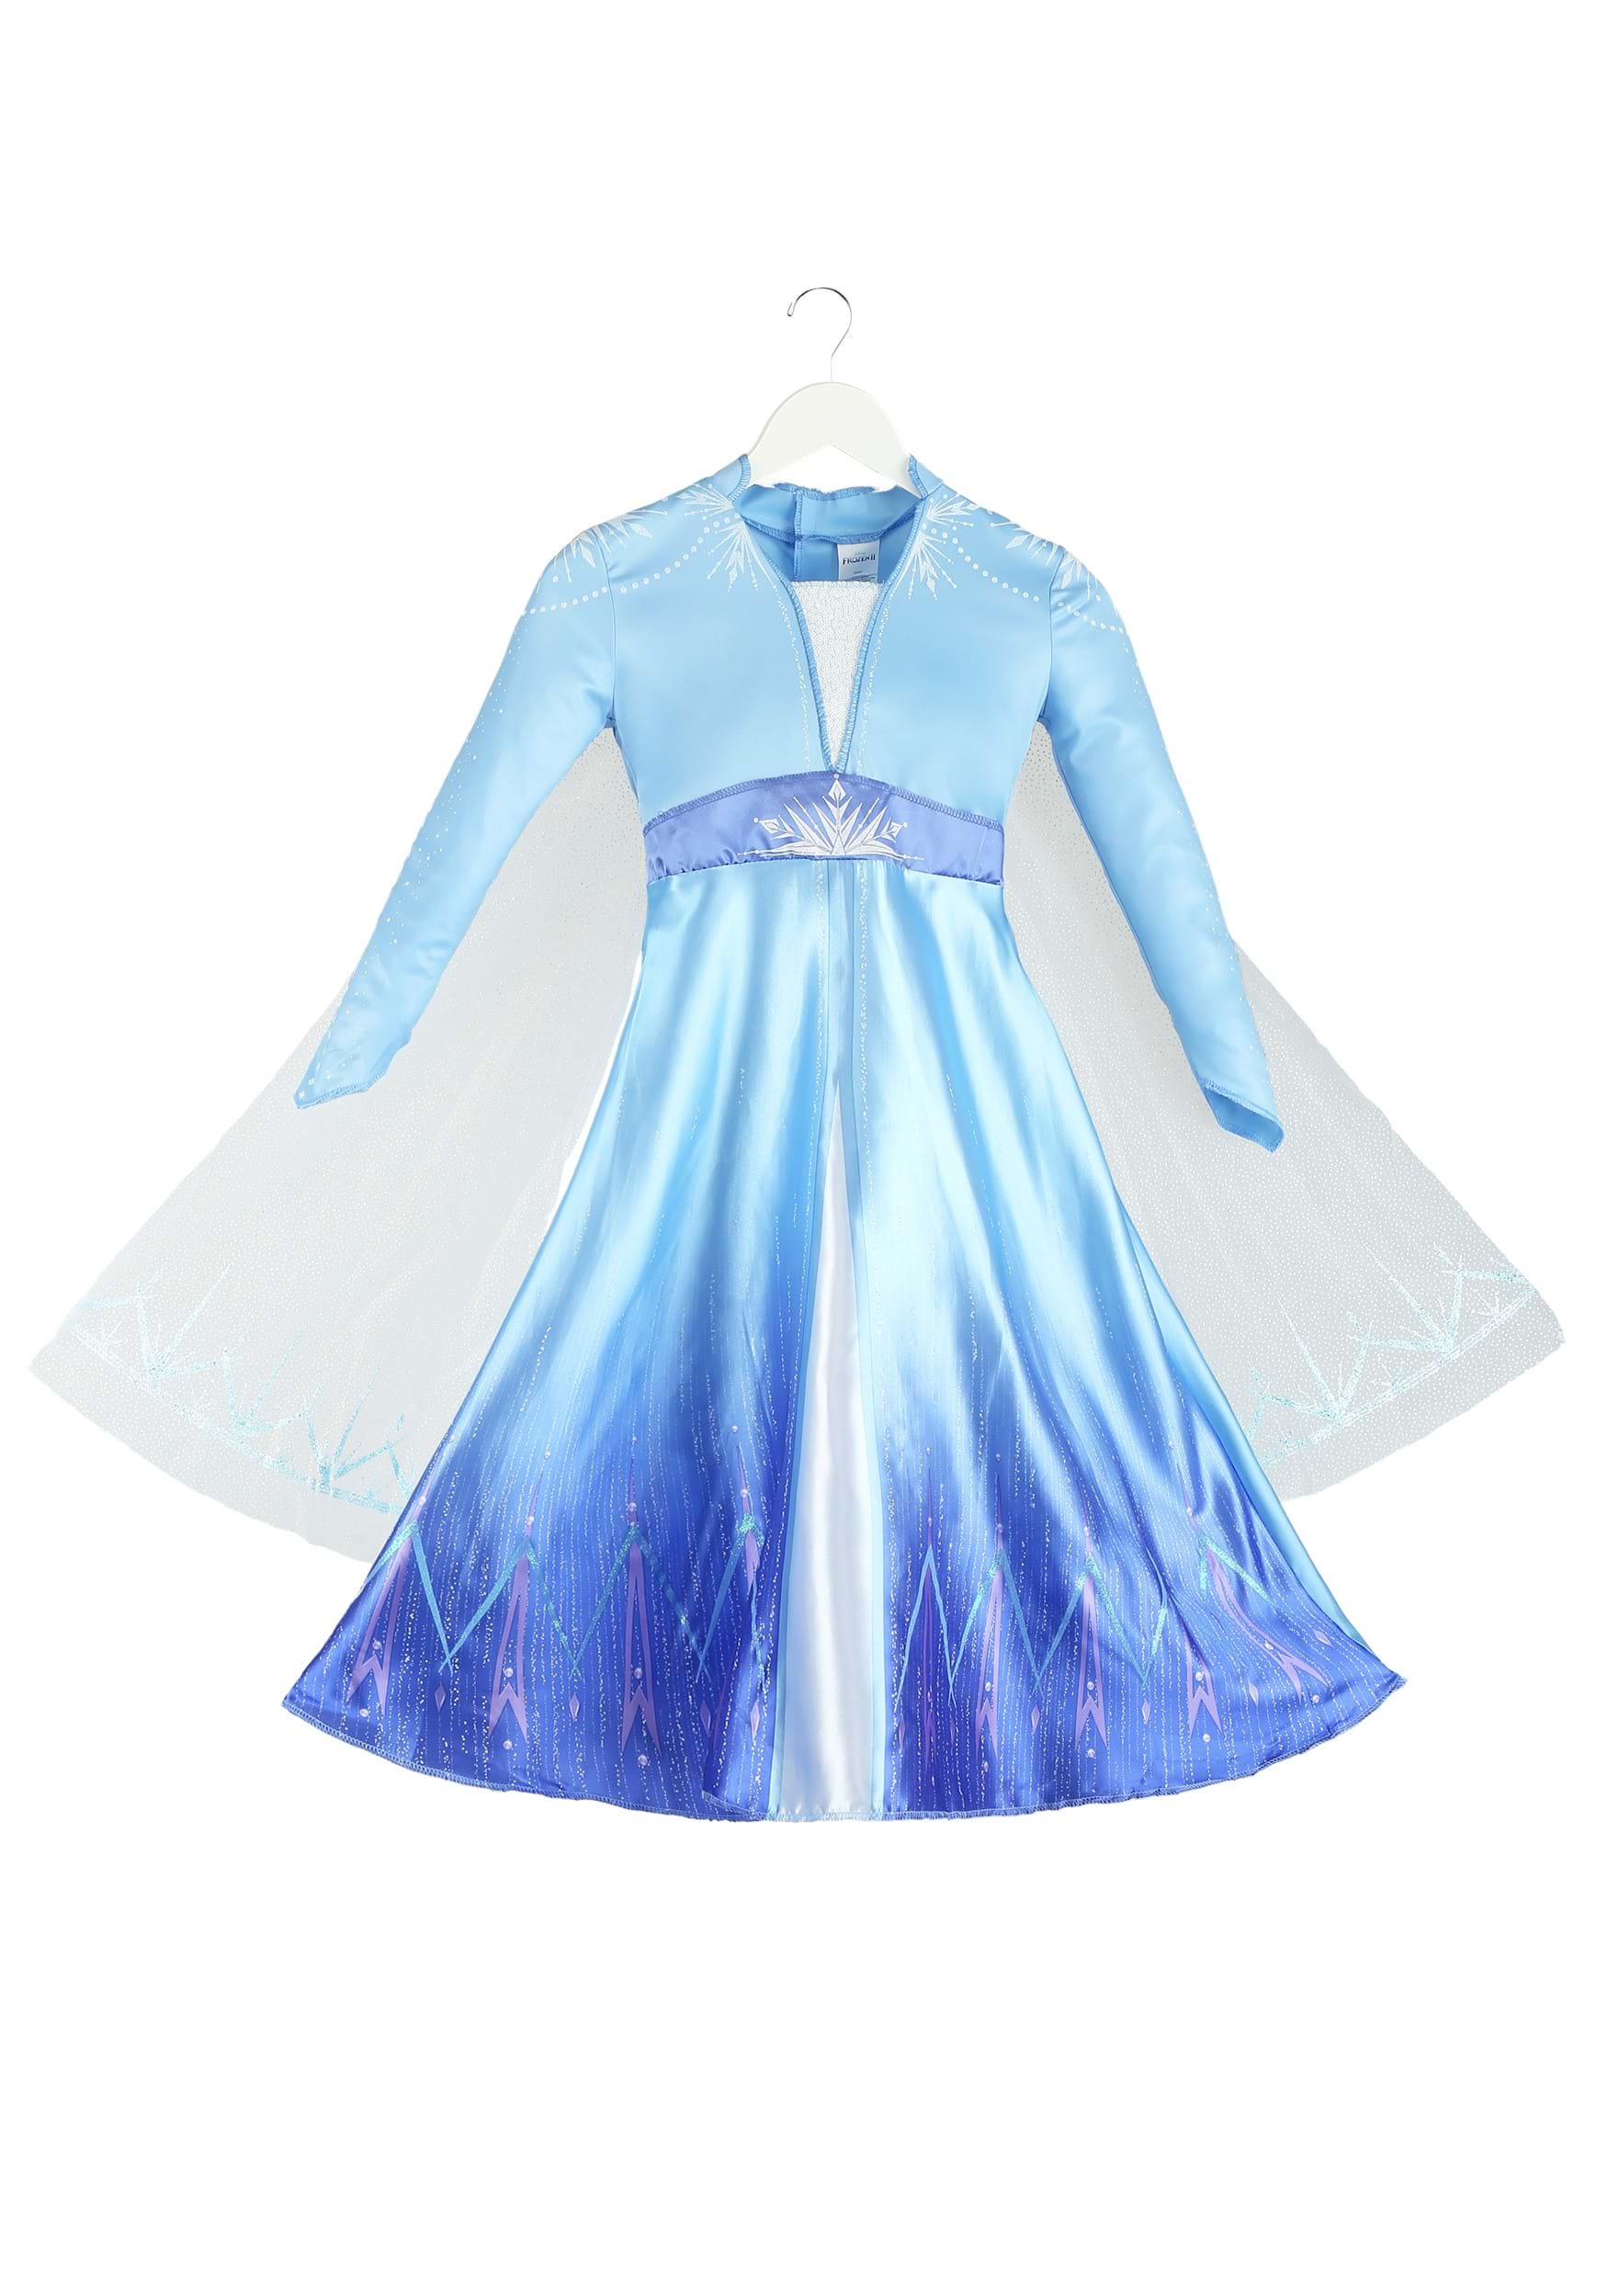 Disney Frozen 2 Elsa Deluxe Costume For Girls